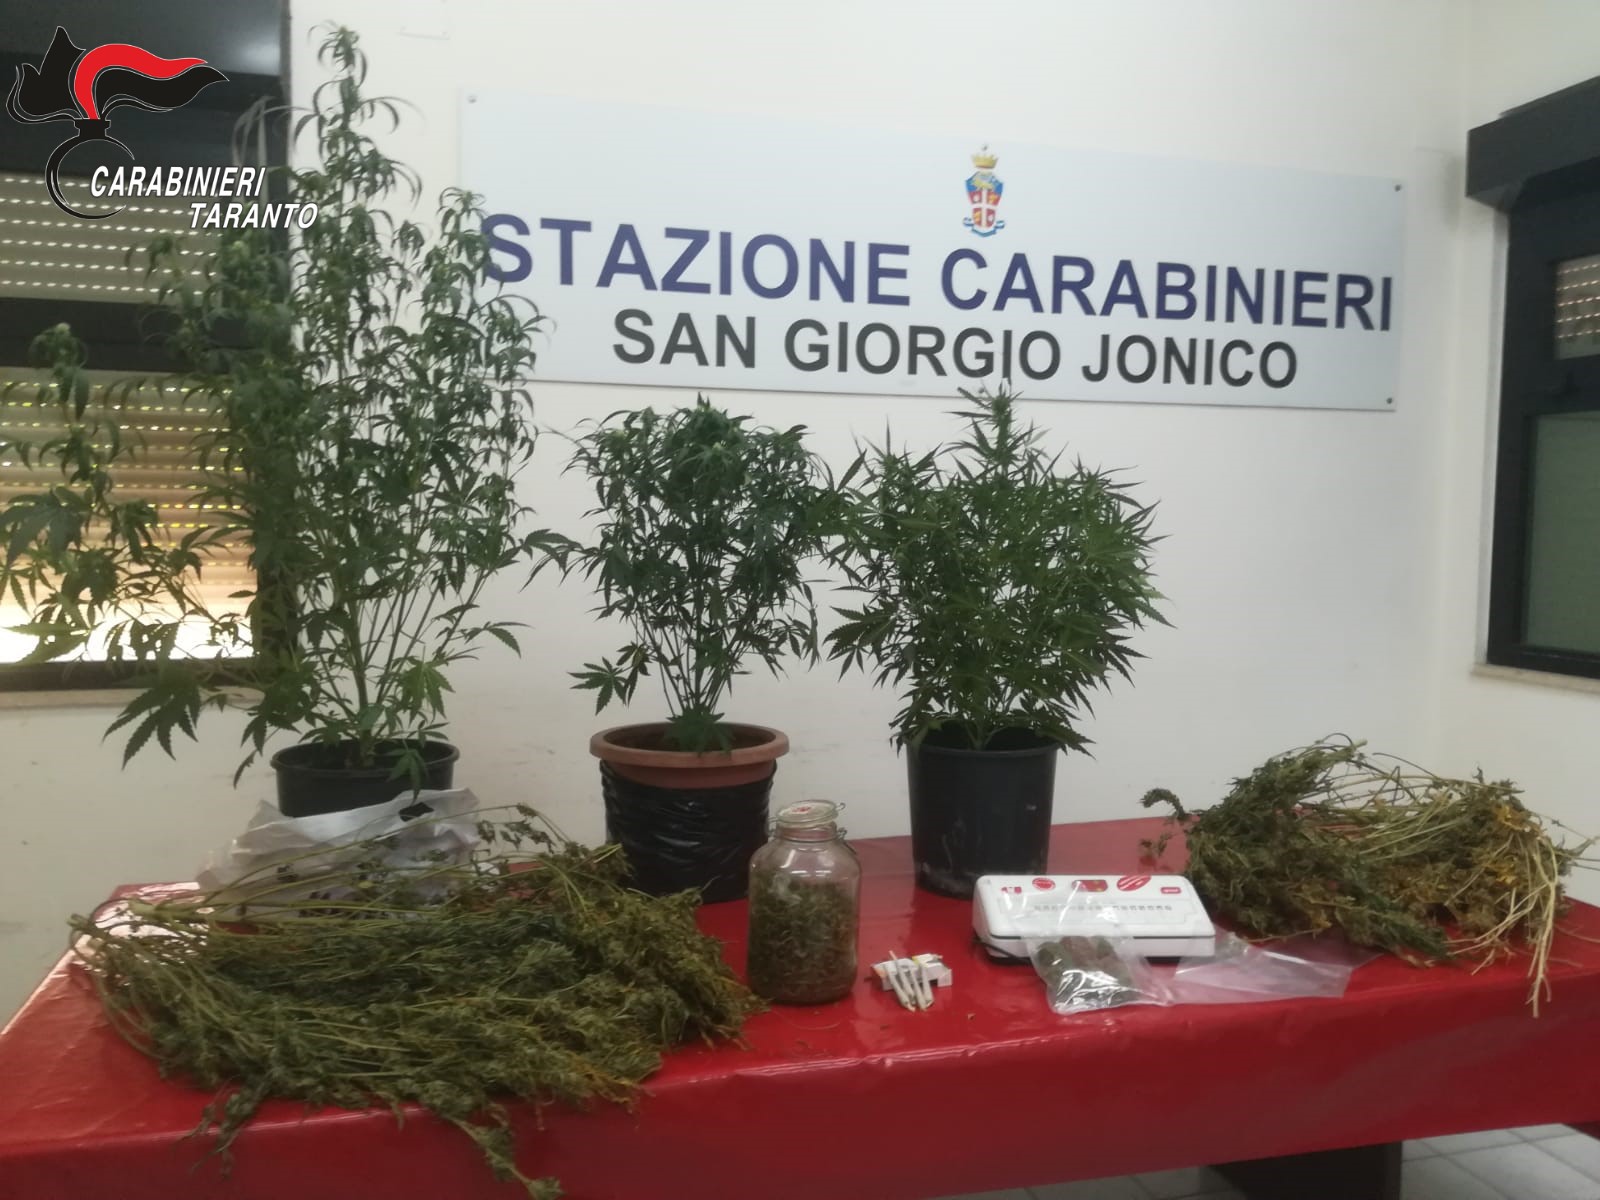 San Giorgio Jonico: produce droga in casa, arrestato dai carabinieri